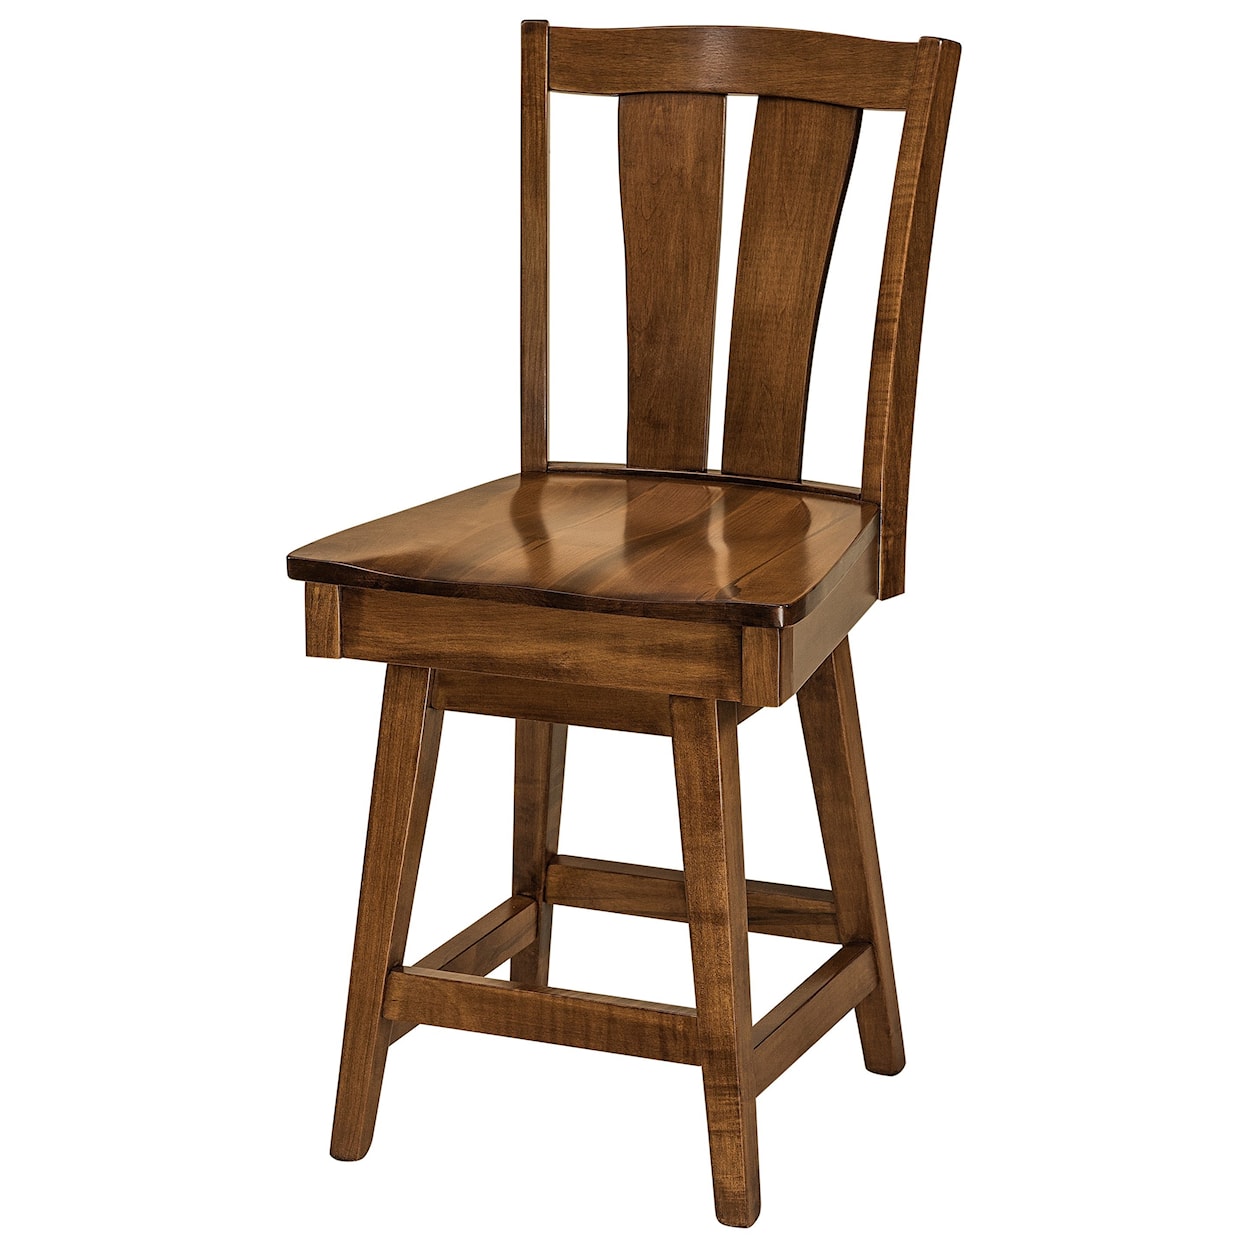 F&N Woodworking Brawley Swivel Counter Height Stool - Wood Seat